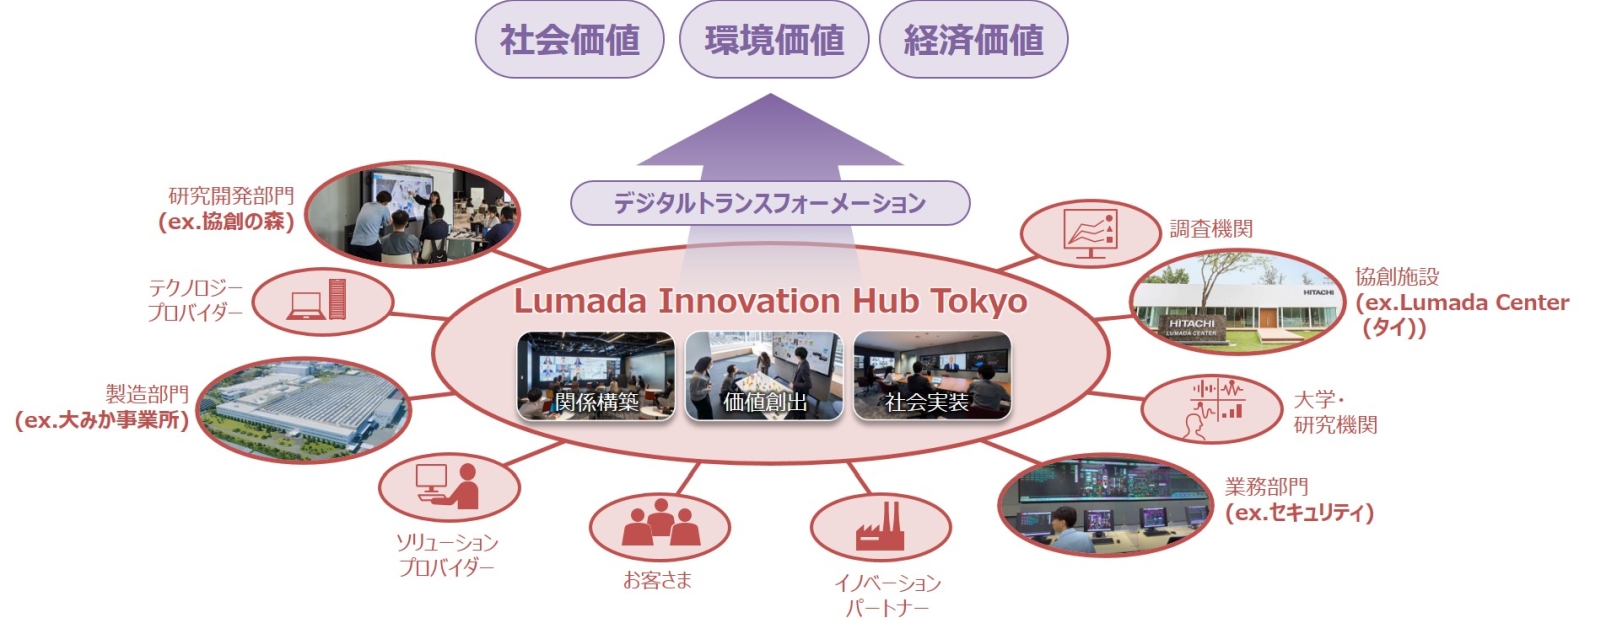 uLumada Innovation Hub TokyoṽC[WiNbNŊgj oTF